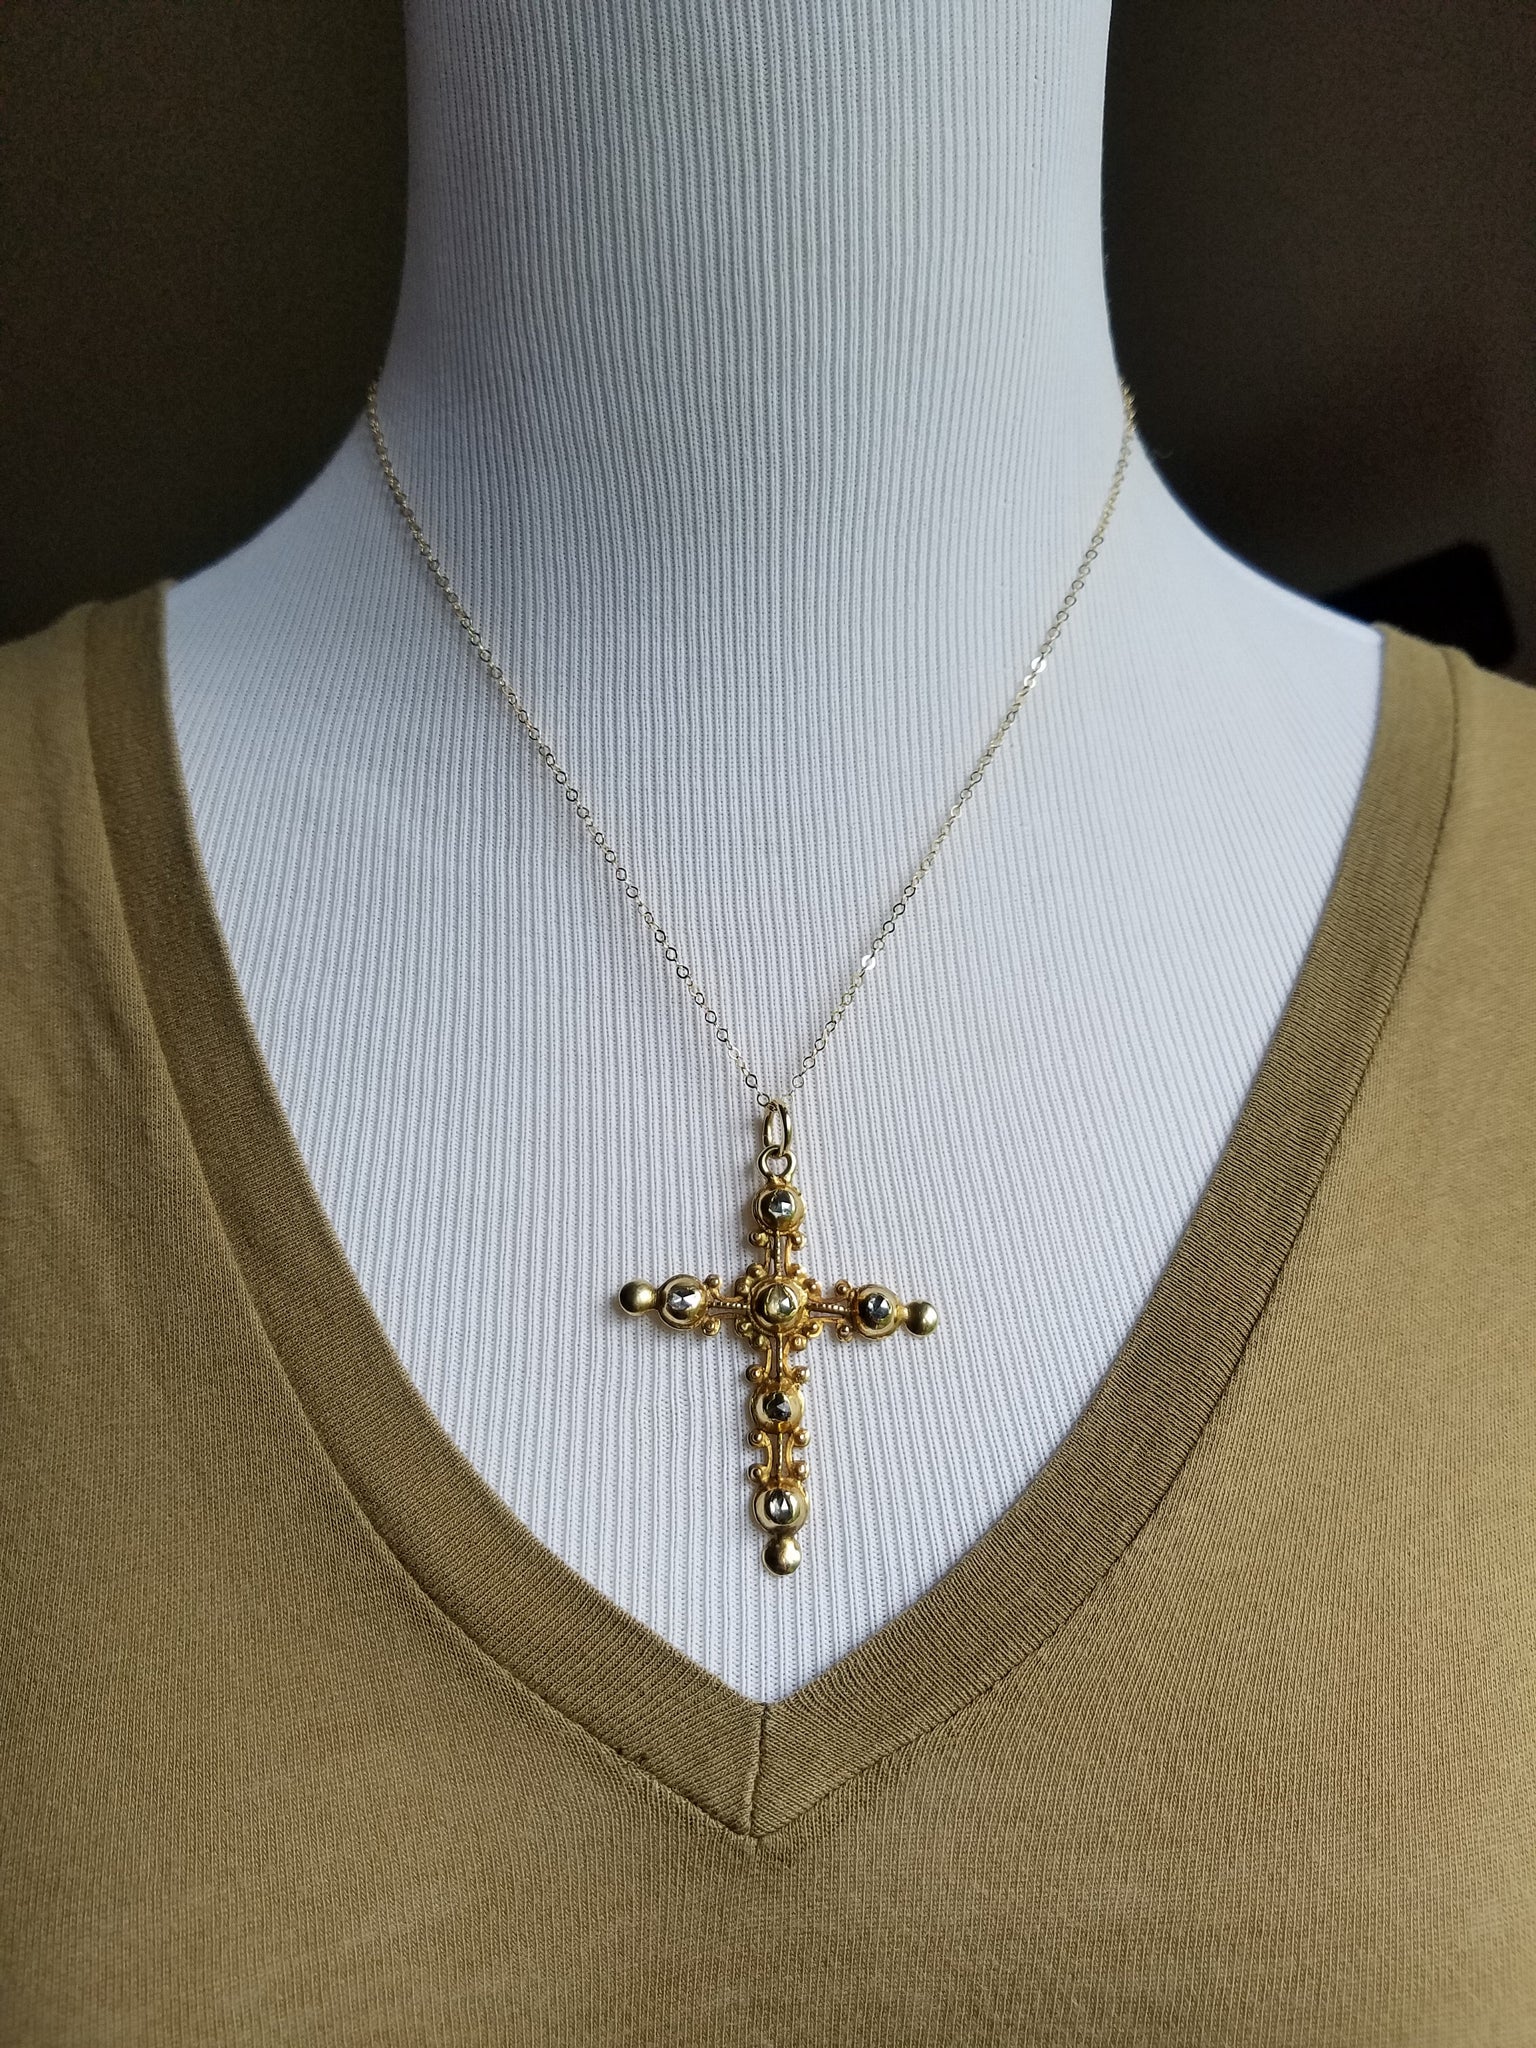 Clearance Christian Latin Cross Charm (7pcs / 17mm x 26mm / Tibetan Silver / 2 Sided) Catholic Jewelry Religion Charm Baptism Necklace Pendant CHM1835